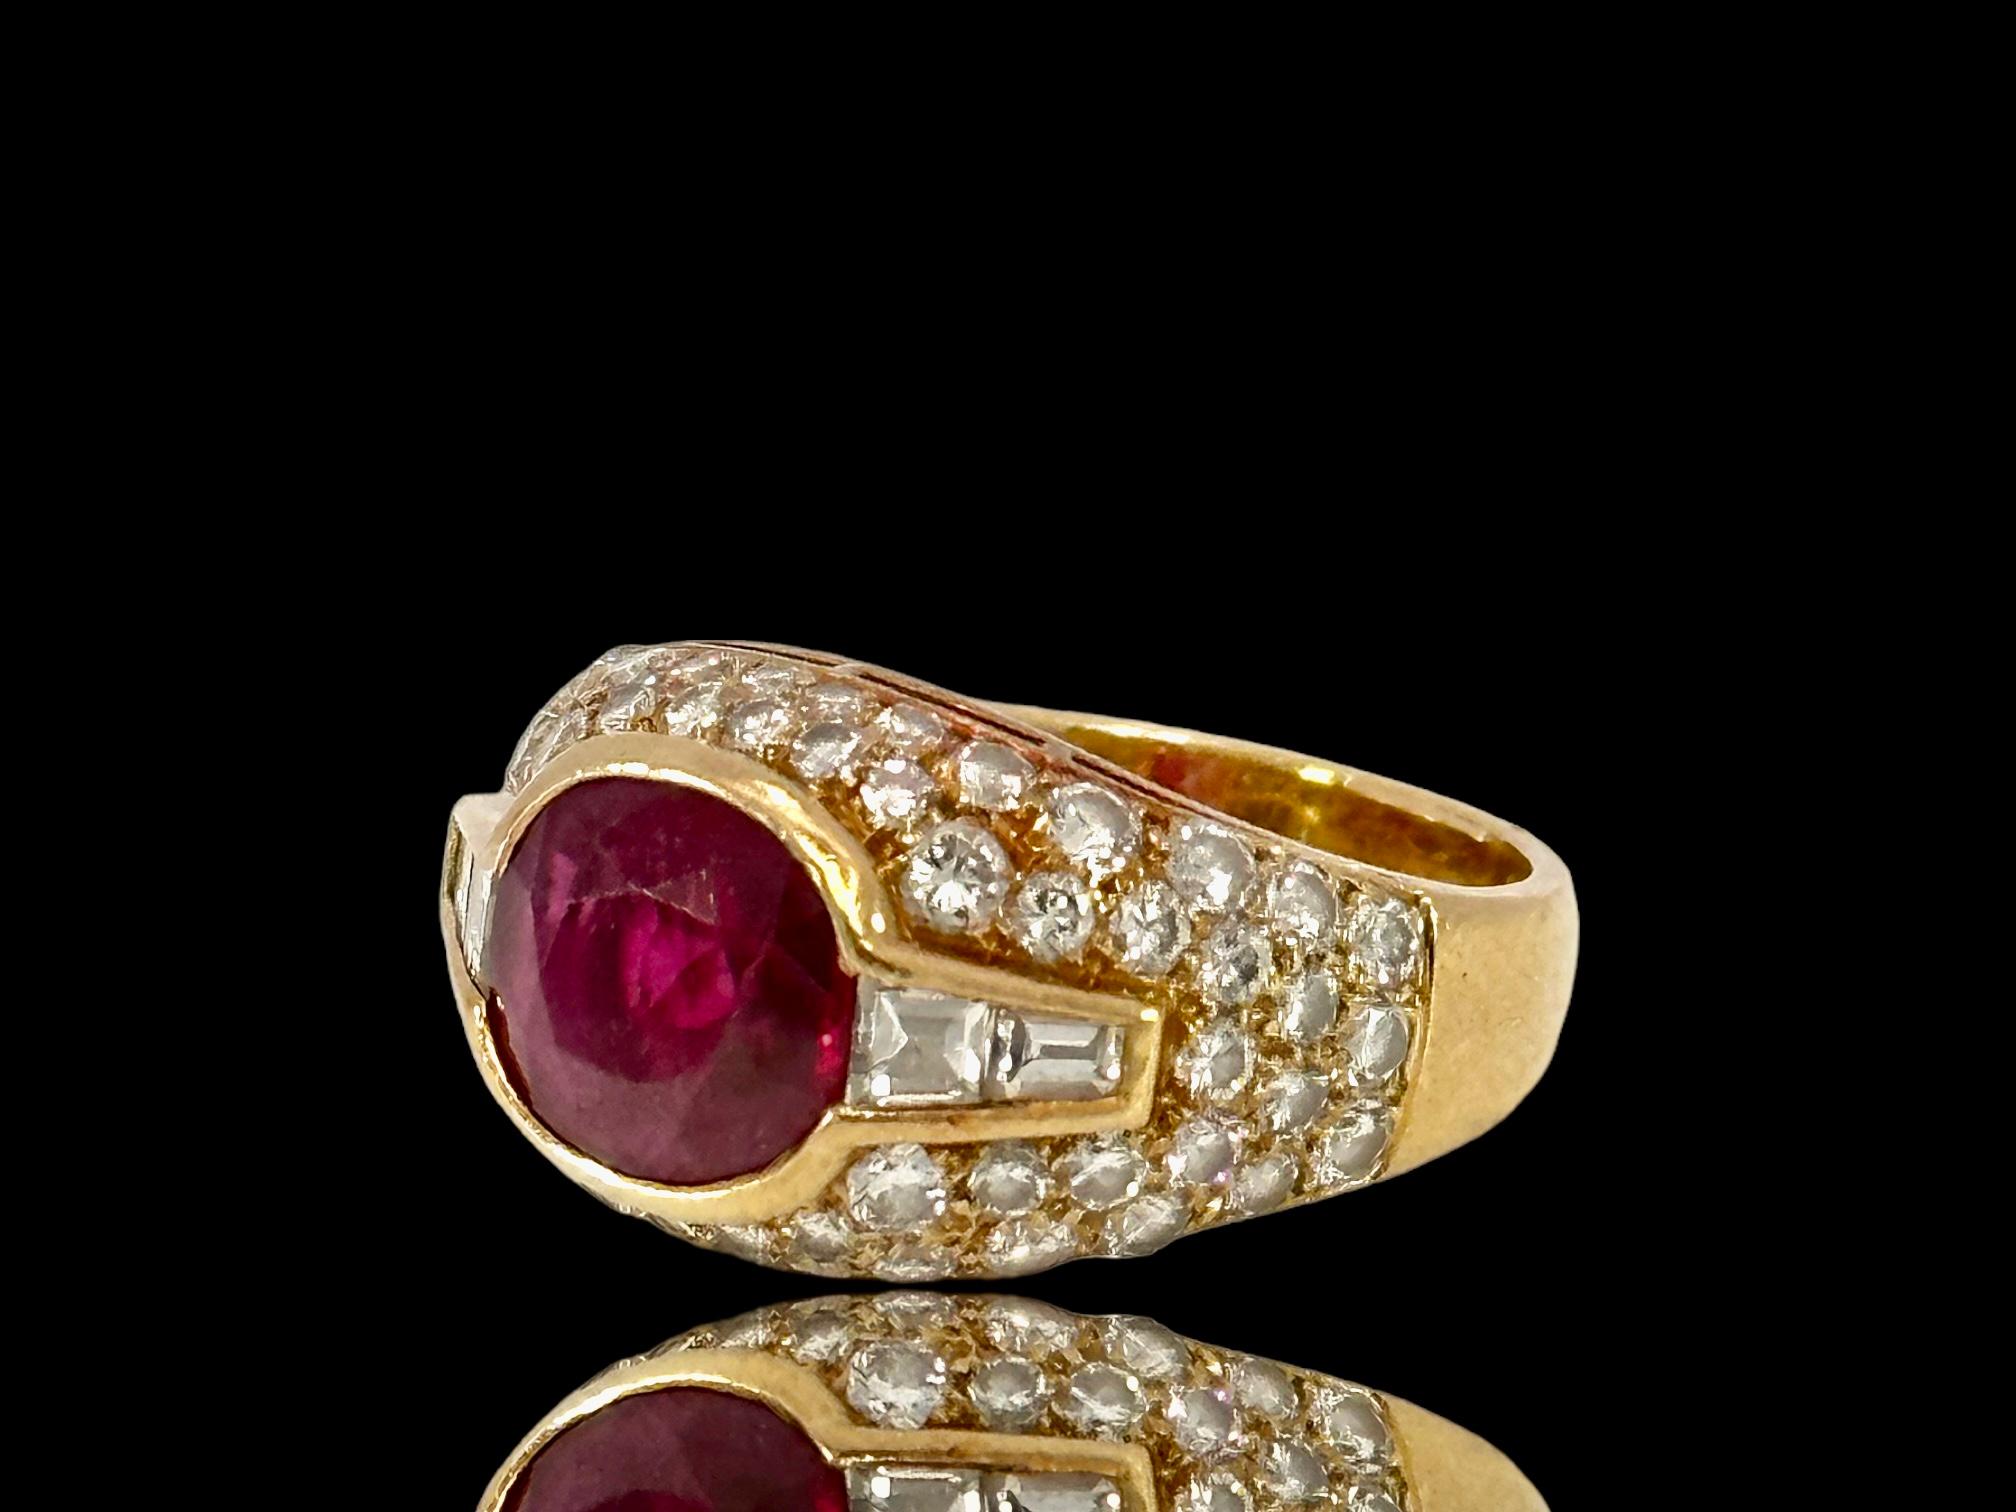 Bvlgari Trombino 18kt Yellow Gold Ring 2.09ct Ruby & Diamonds With GRS Cert For Sale 4